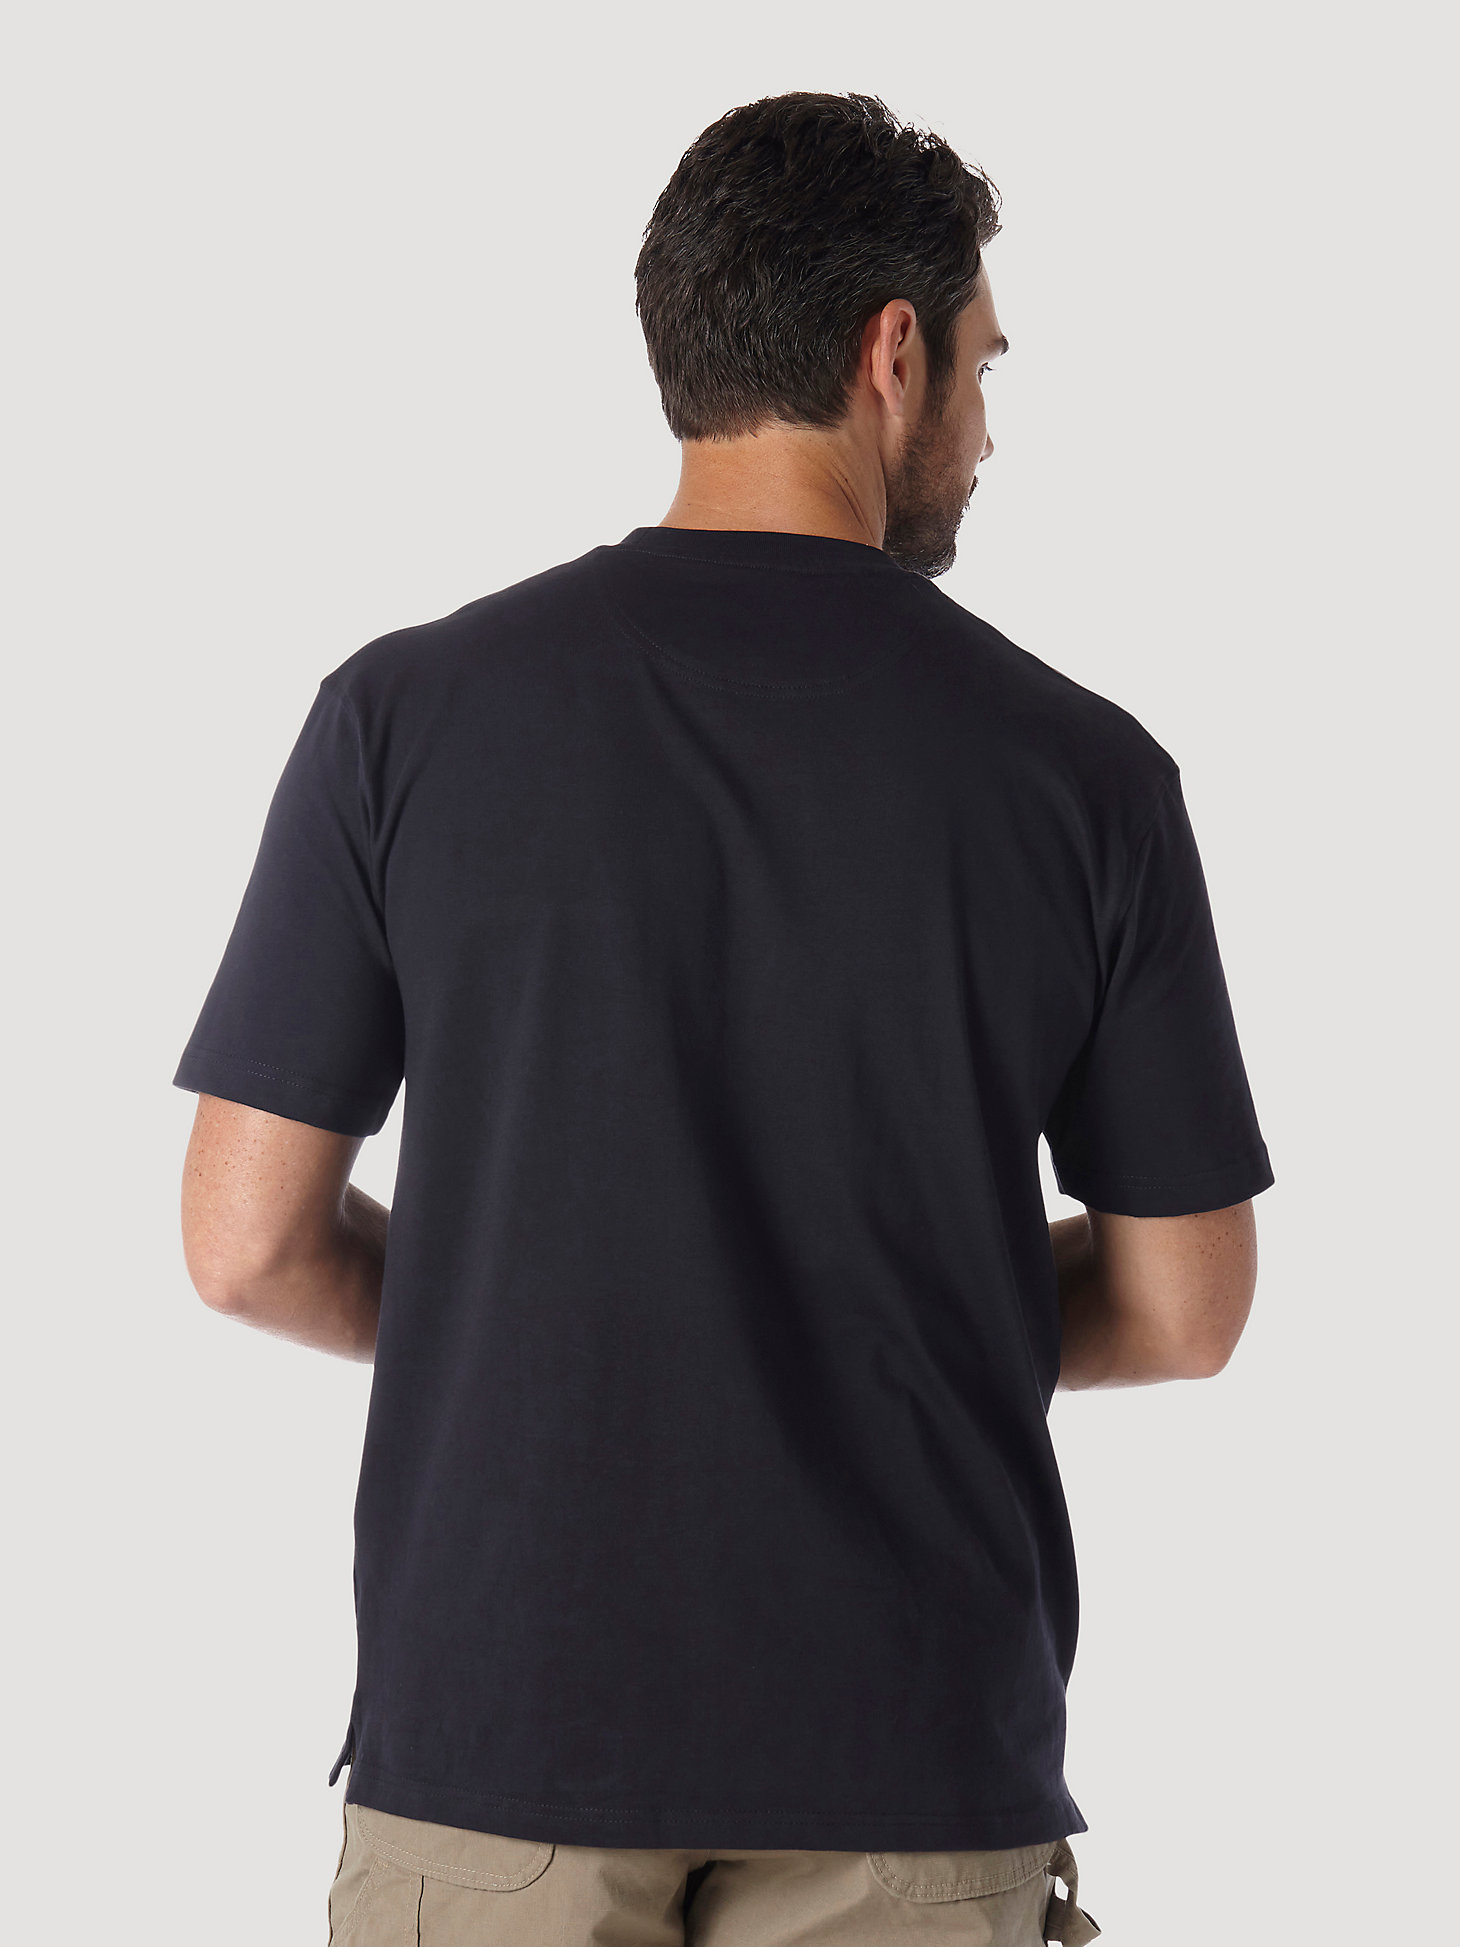 Wrangler® RIGGS Workwear® Short Sleeve Pocket T-Shirt in Navy alternative view 5